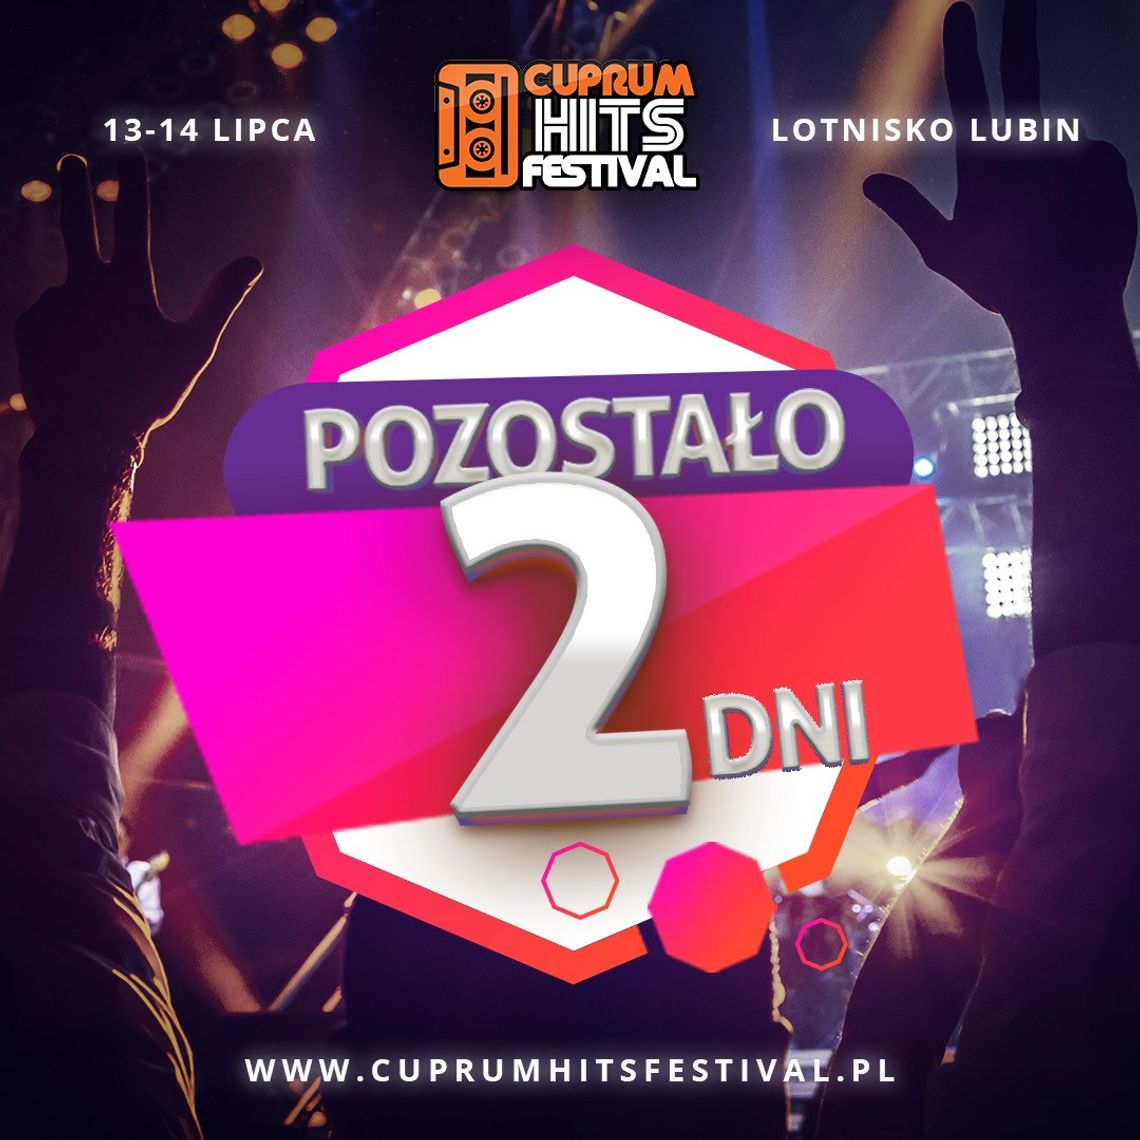 Cuprum Hits Festival za dwa dni!